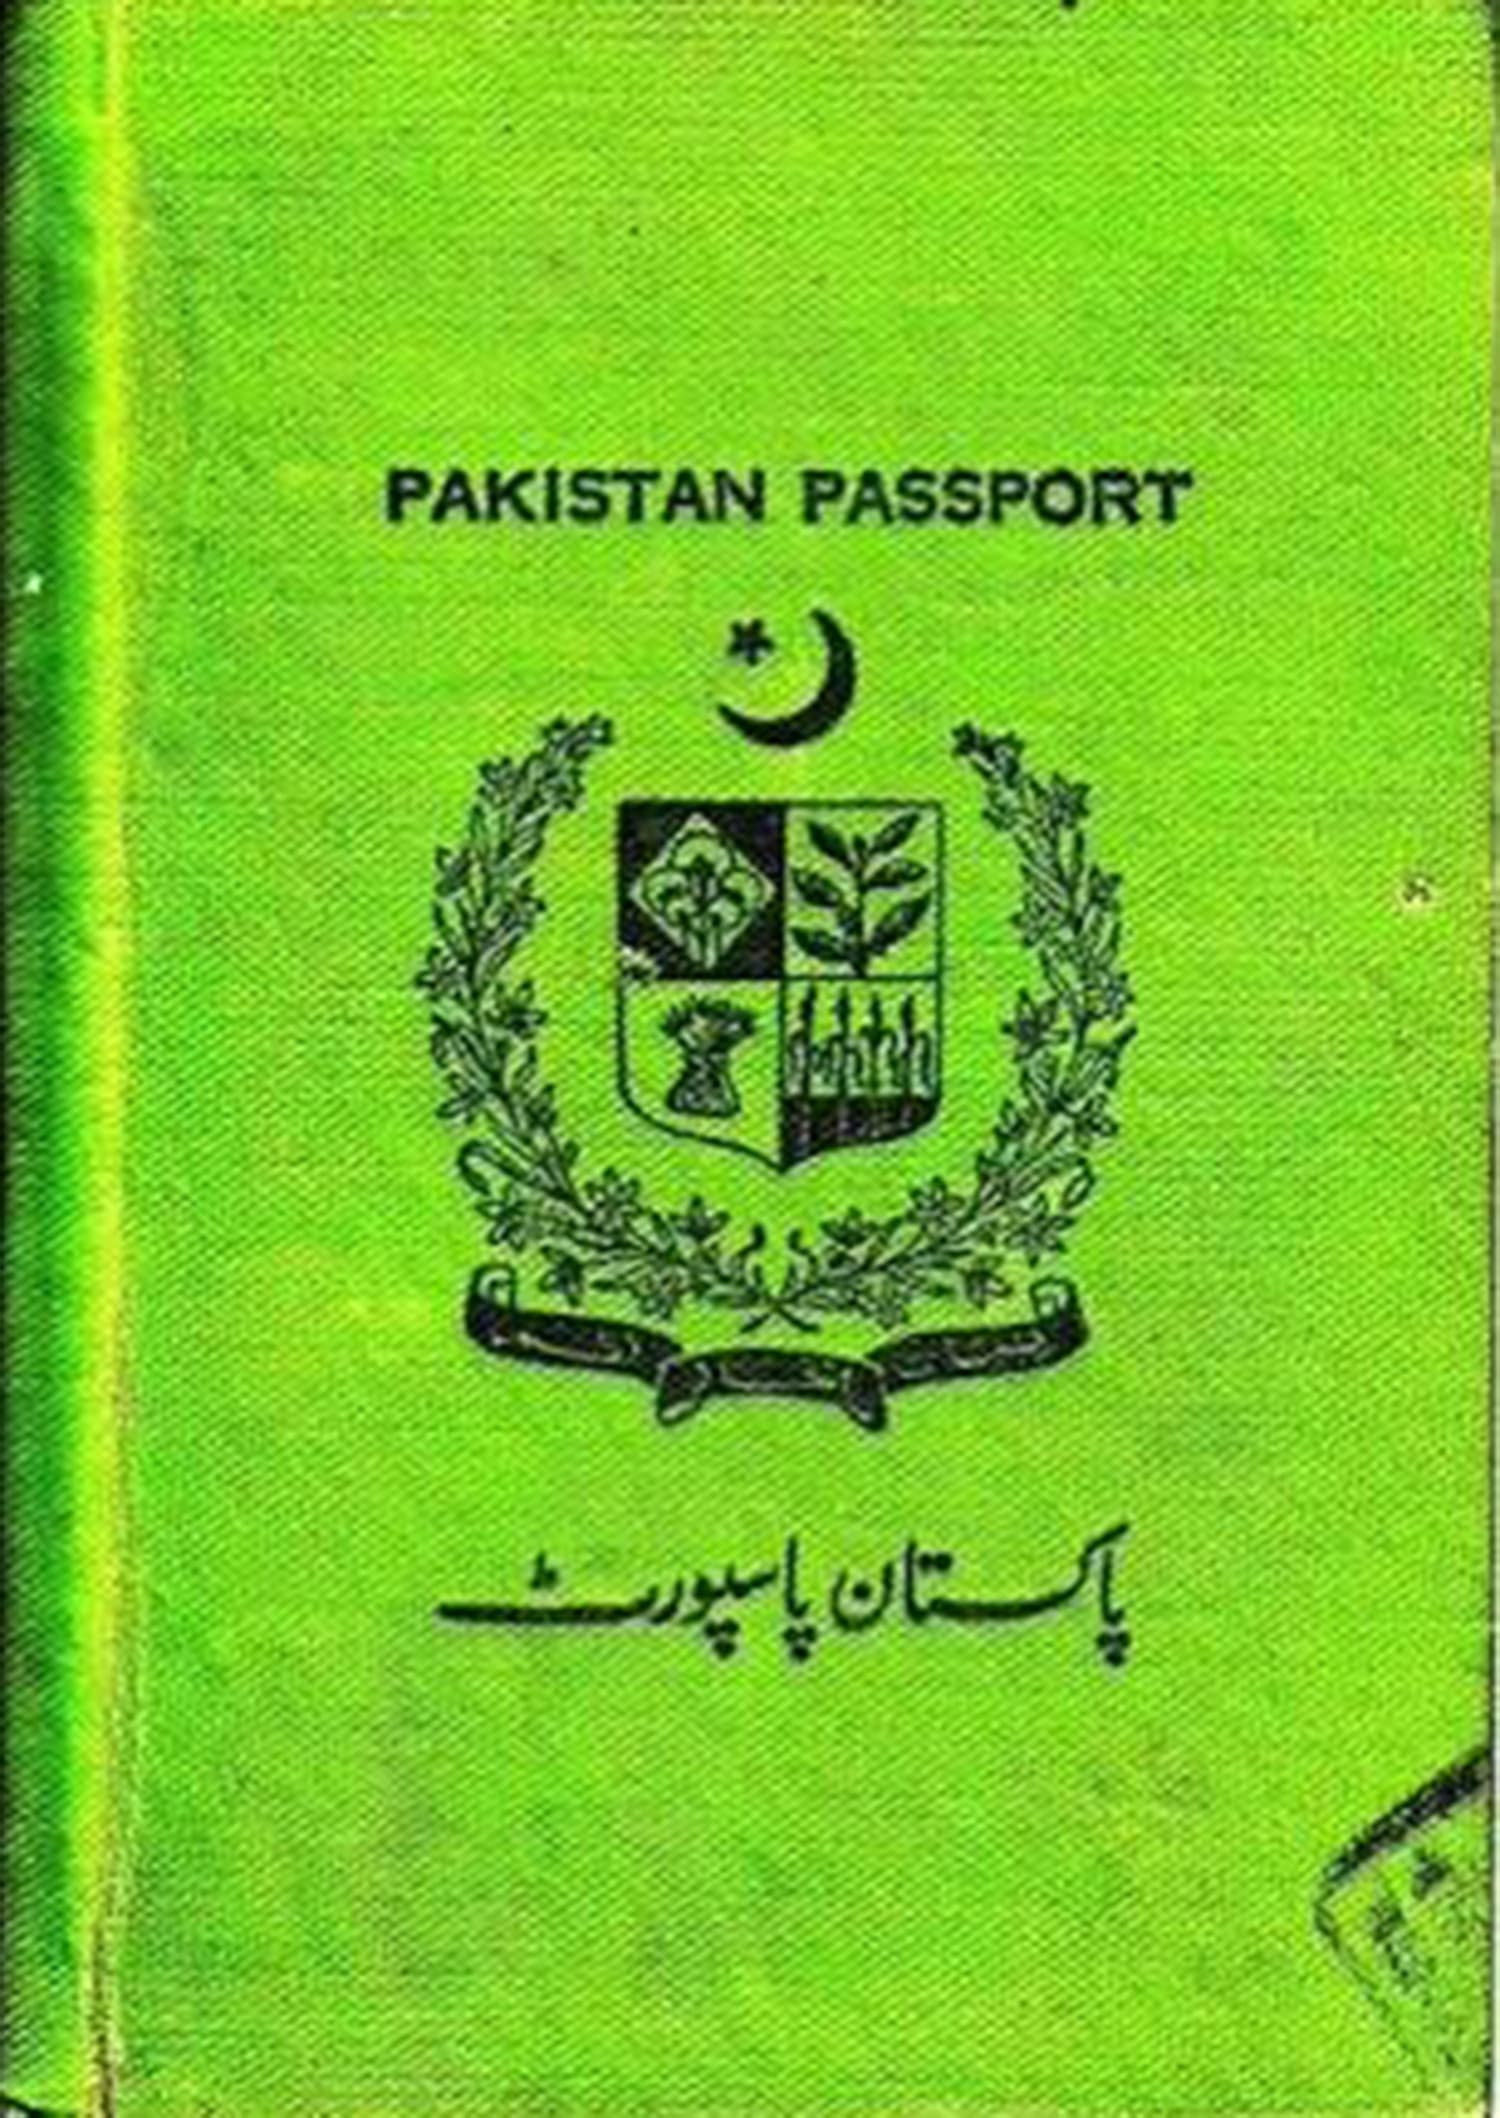 Pakistani passport during Ayub's era